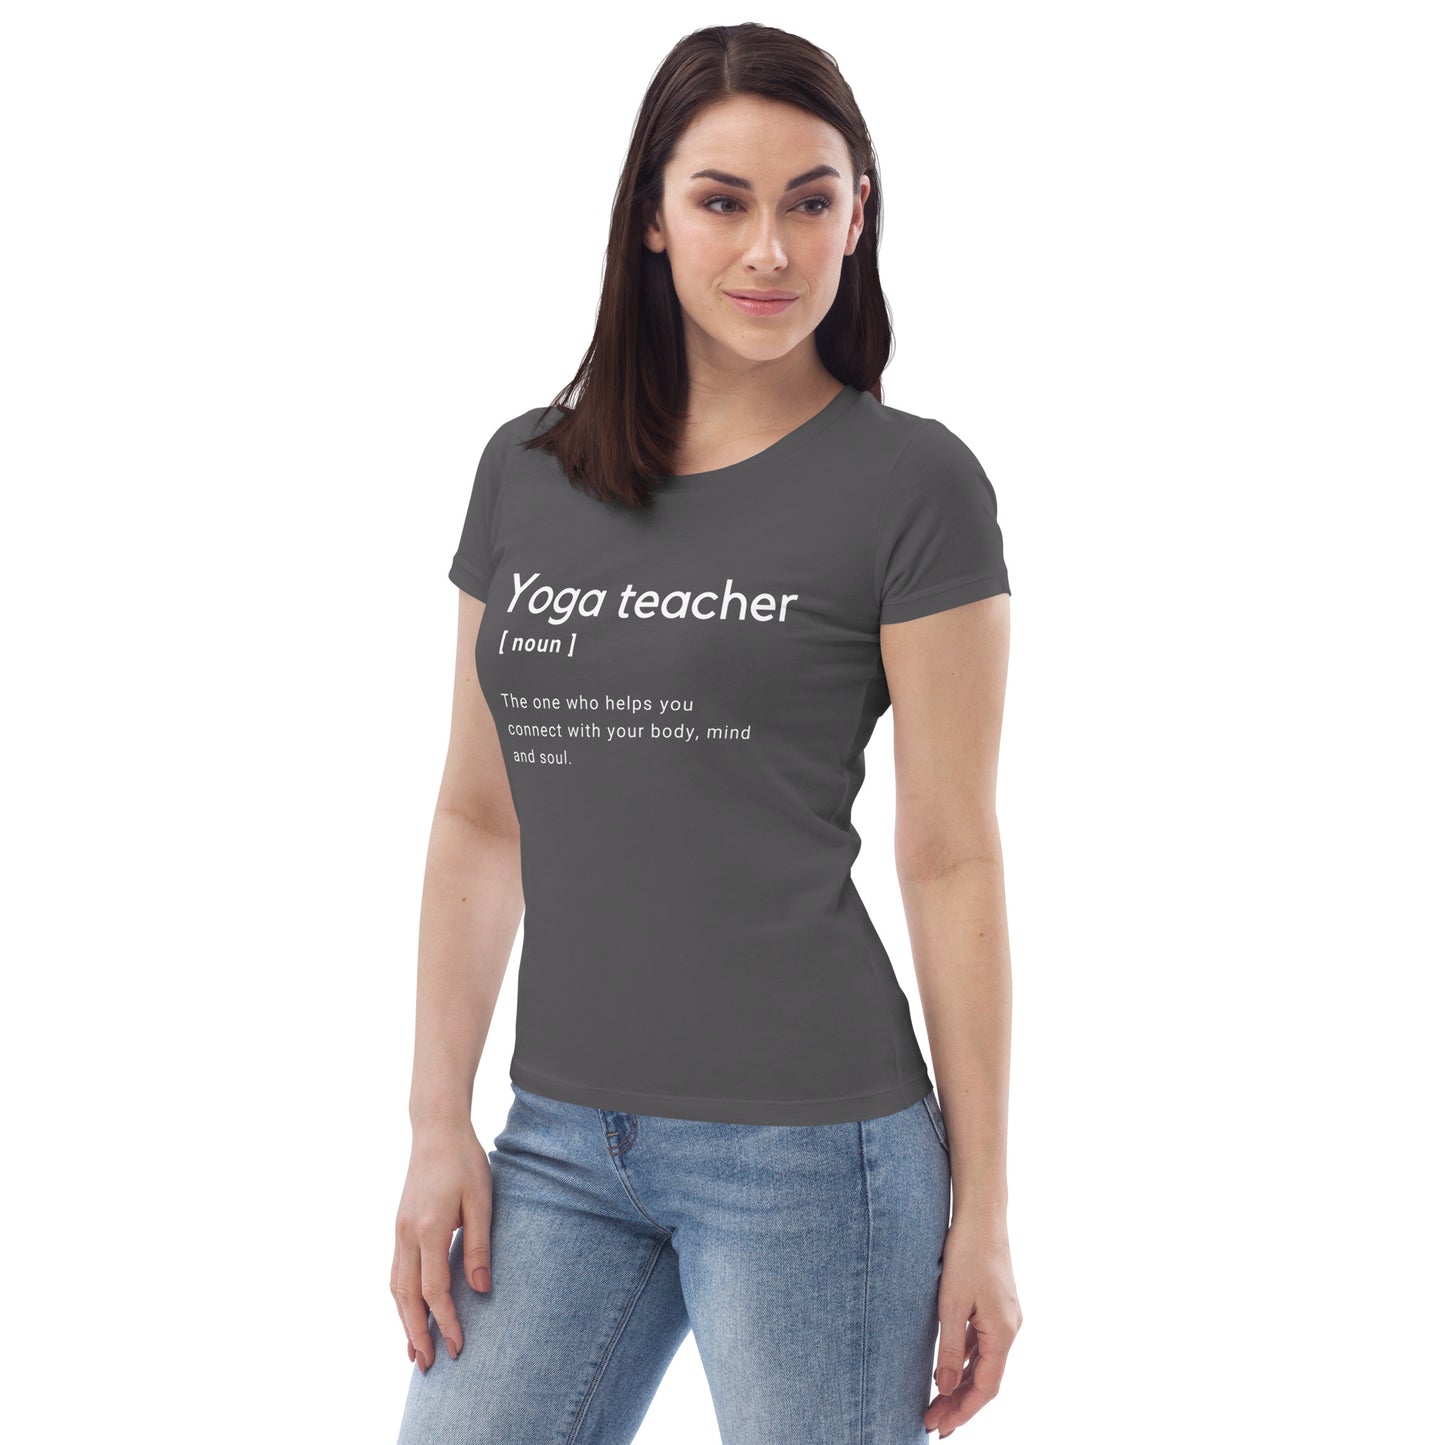 Yoga teacher t-shirt